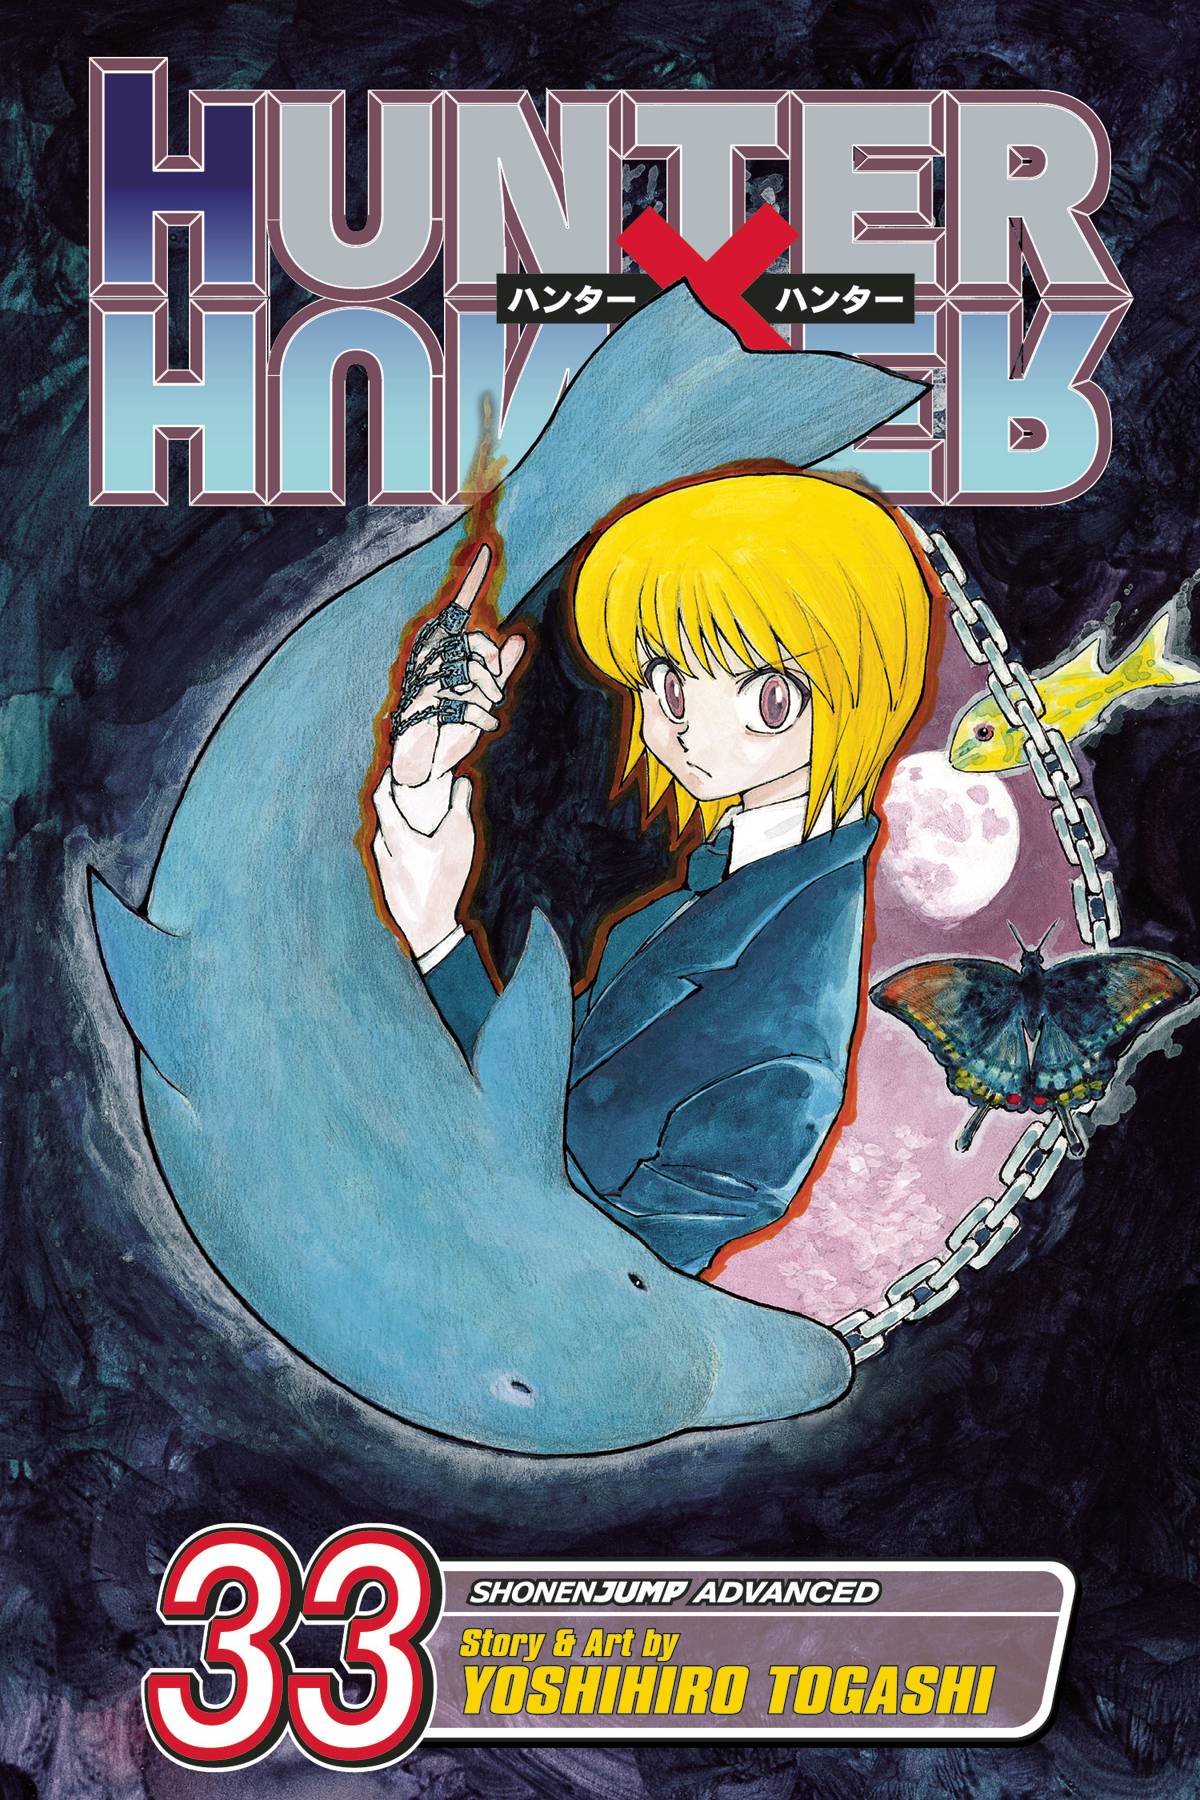 Hunter X Hunter Volume 33 By Yoshihiro Togashi Published By Viz Media Llc Forbiddenplanet Com Uk And Worldwide Cult Entertainment Megastore